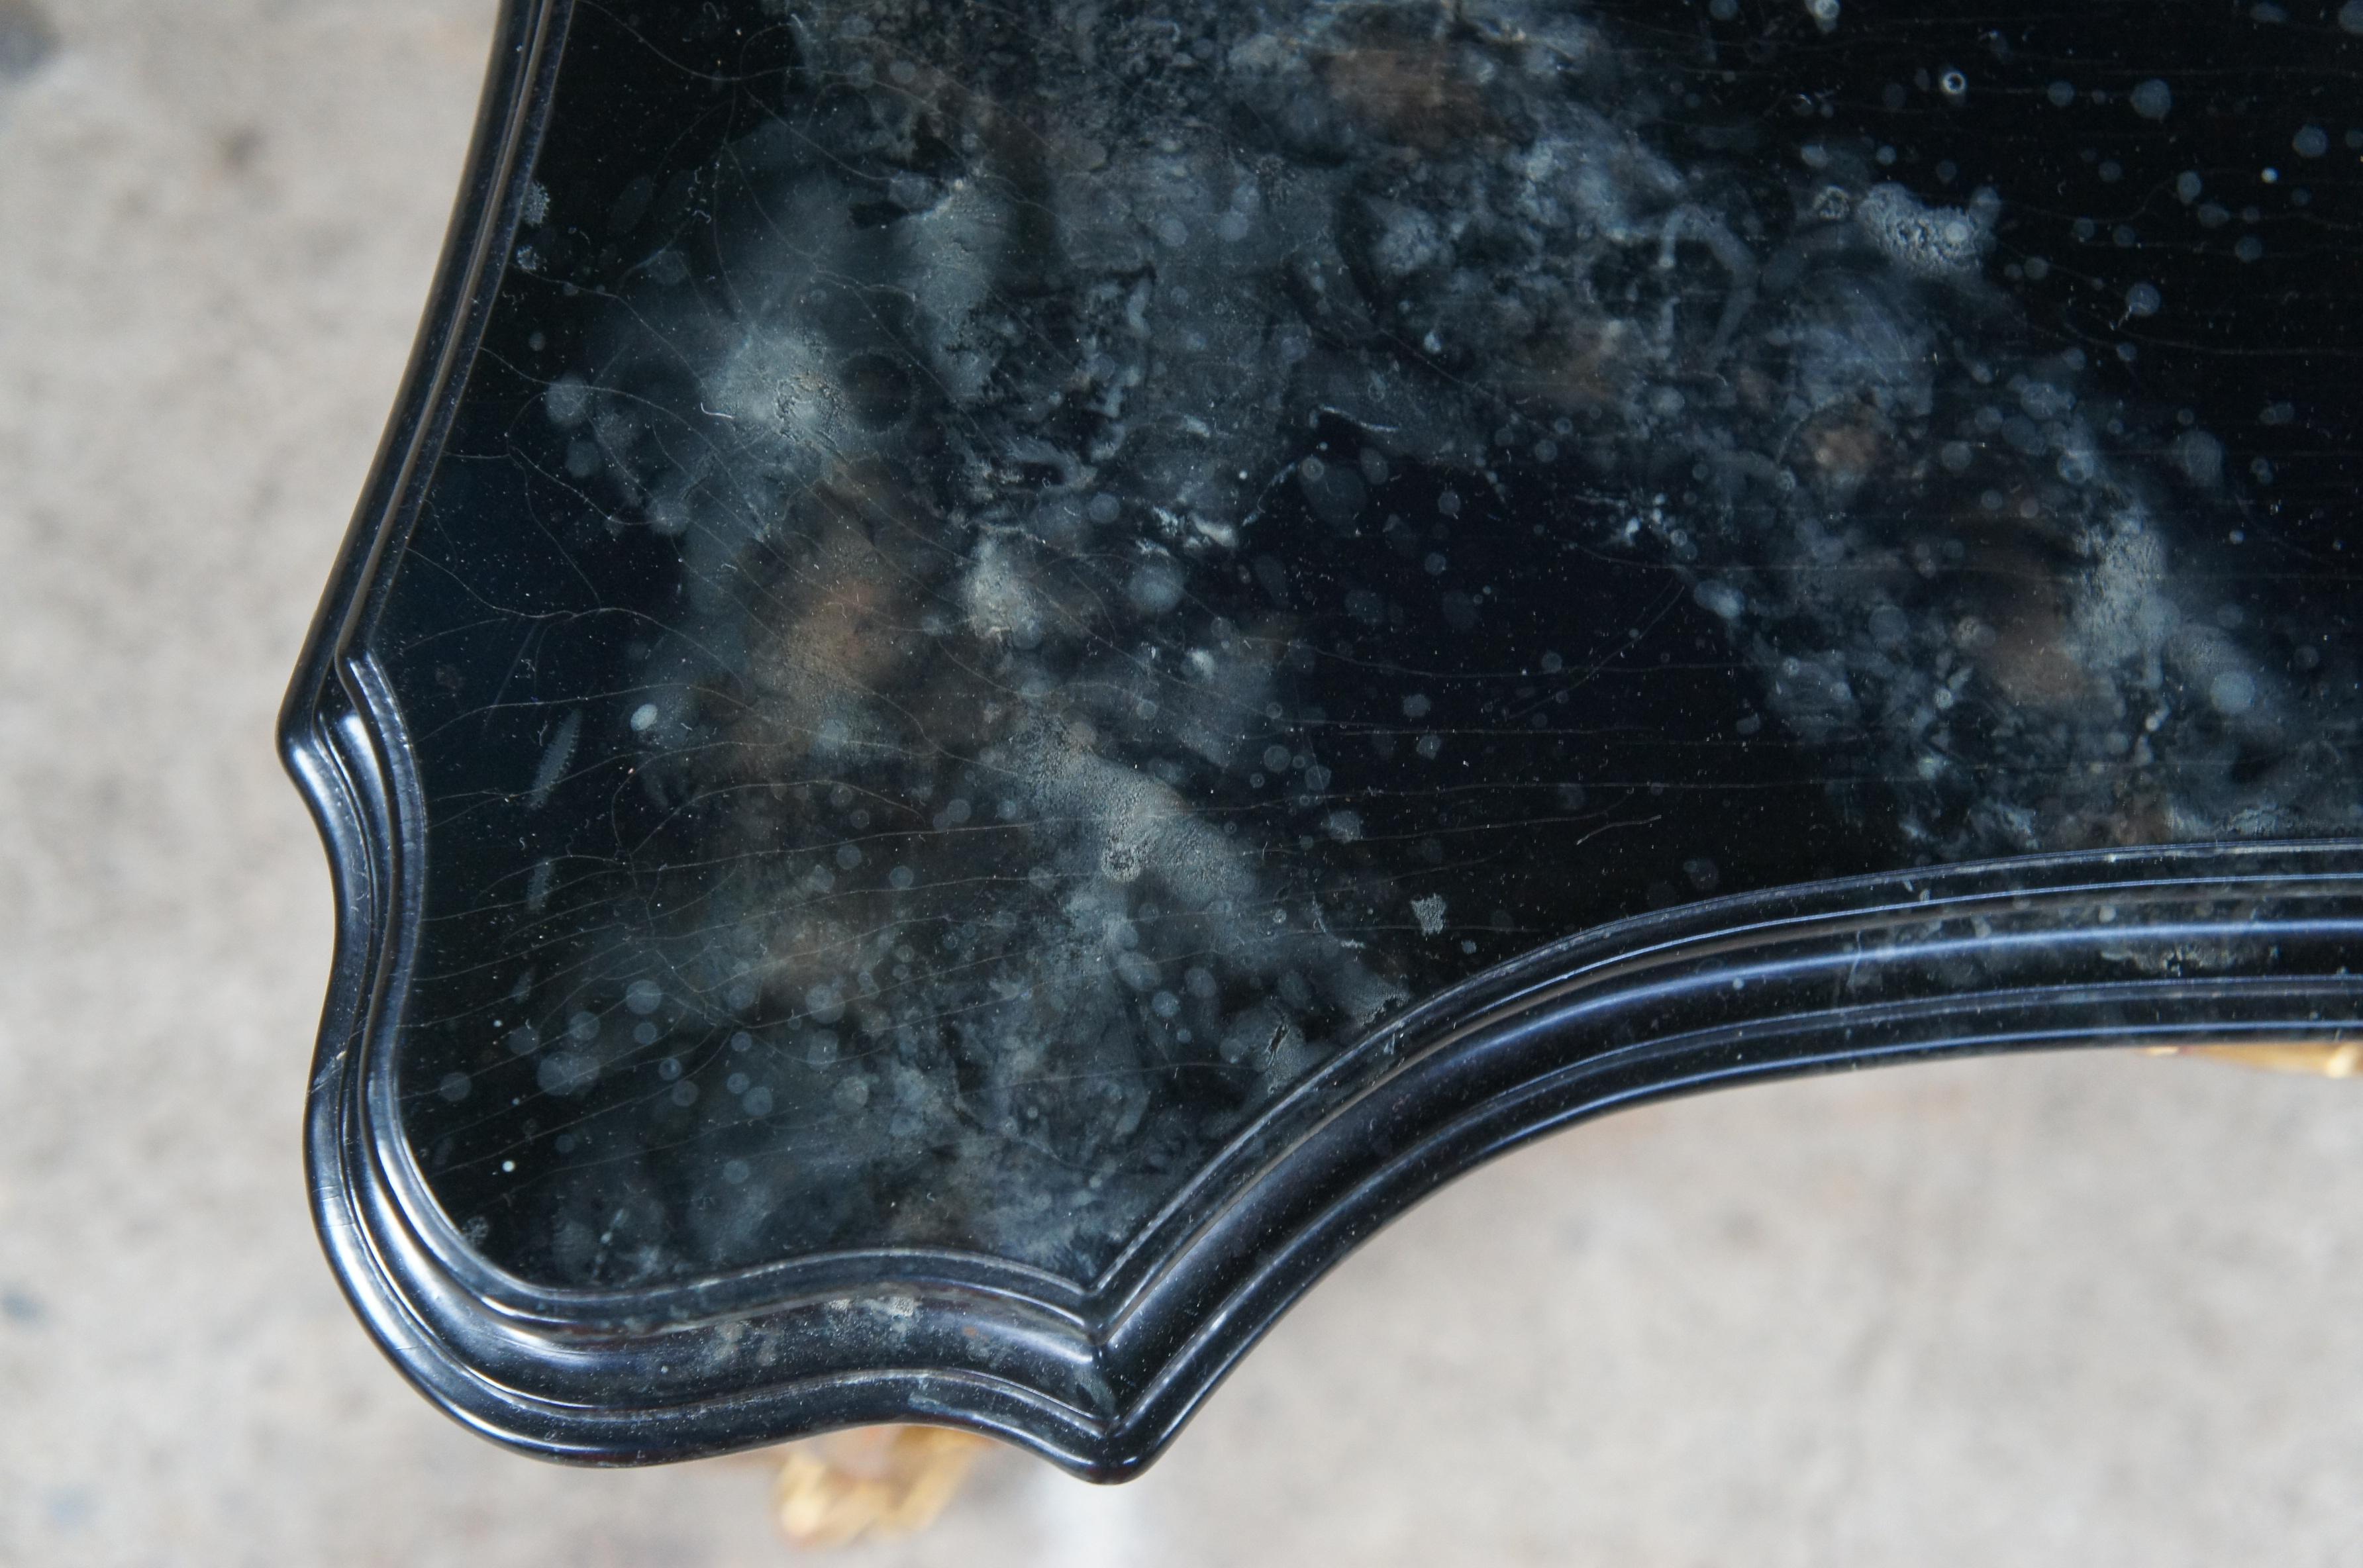 20th Century Italian Serpentine Baroque Rococo Style Faux Marble Console Table For Sale 4